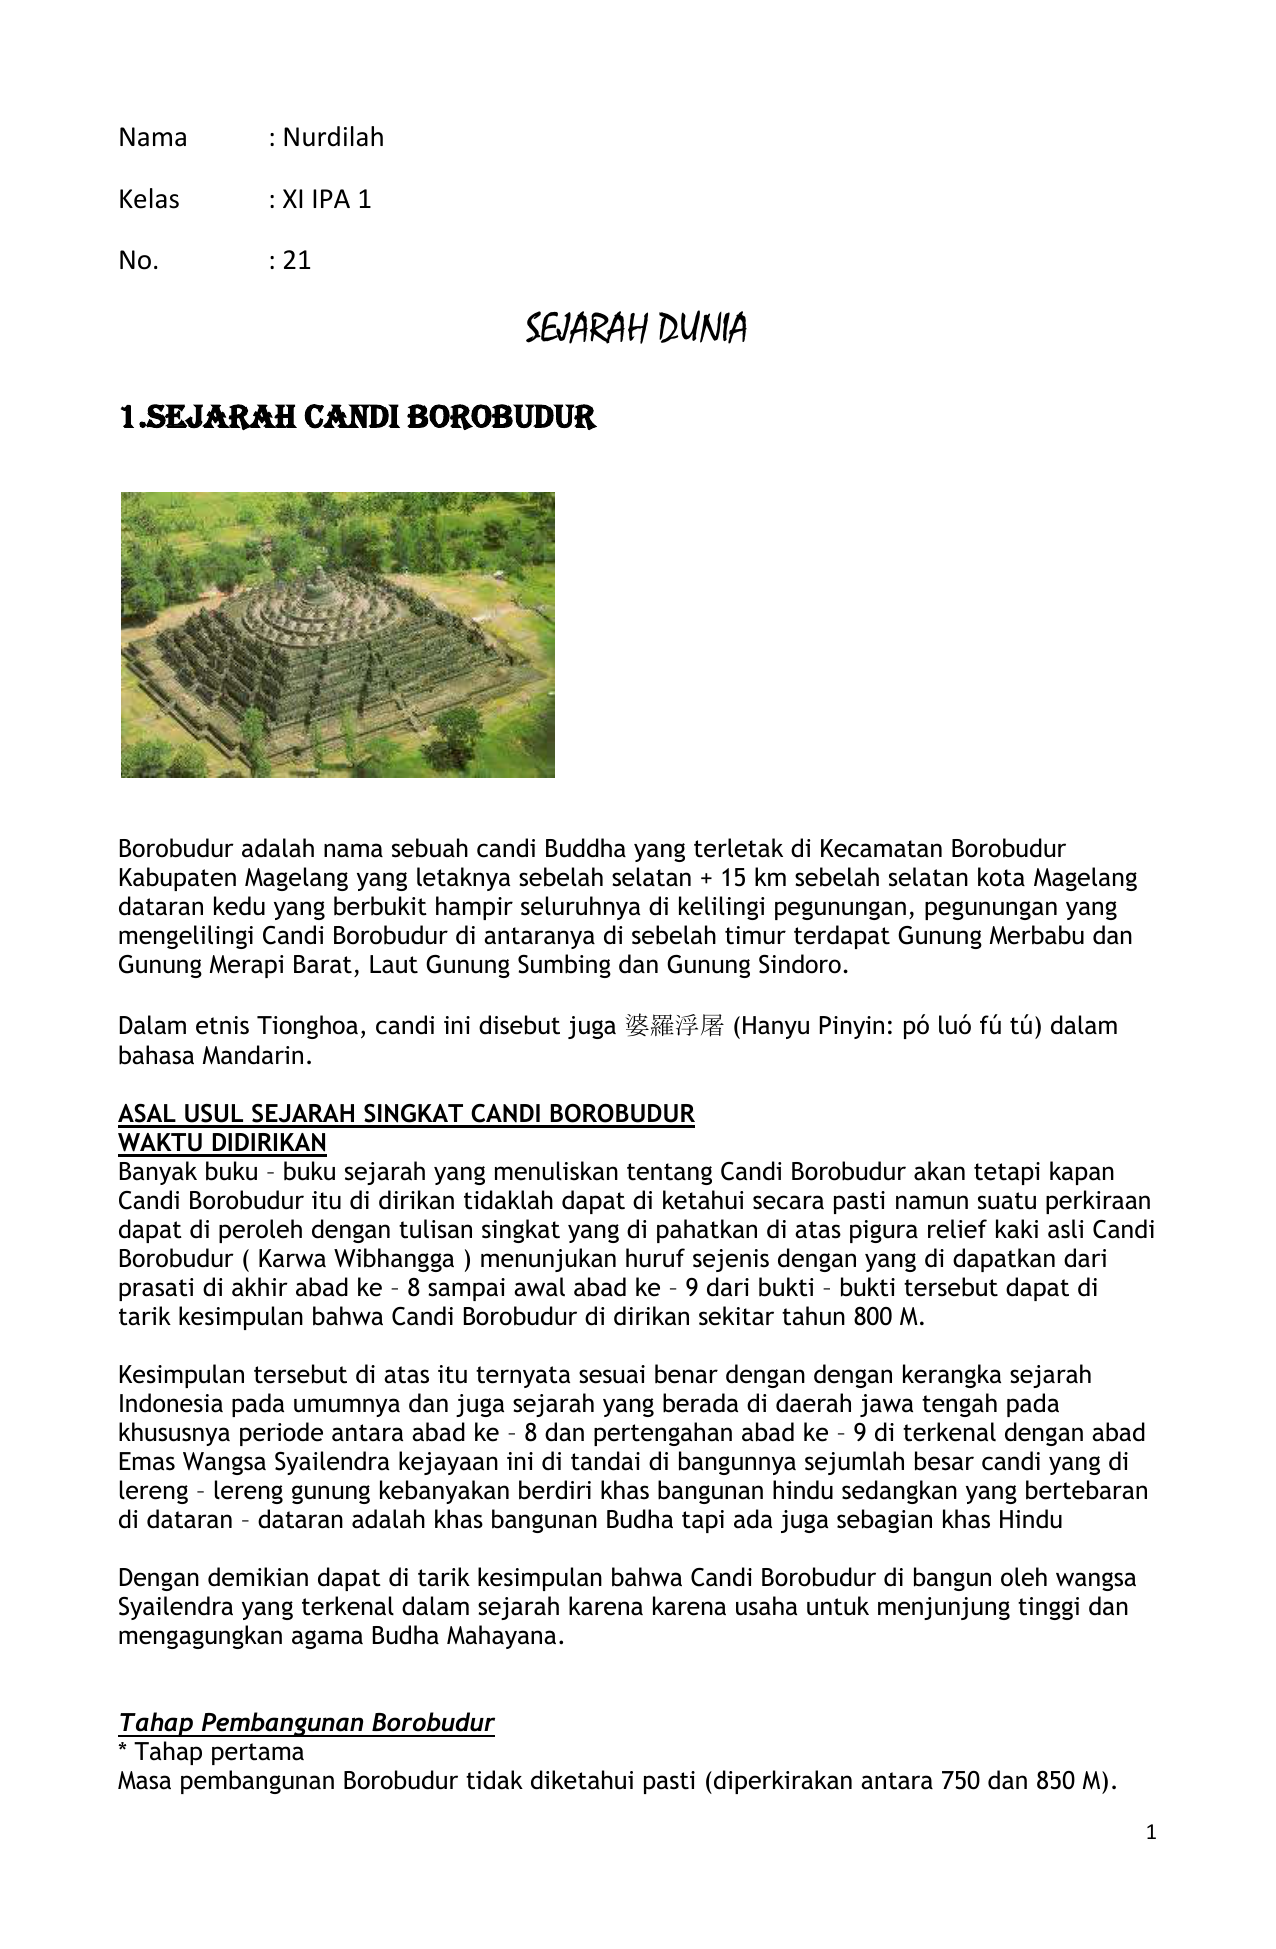 Contoh Teks Deskripsi Candi Borobudur